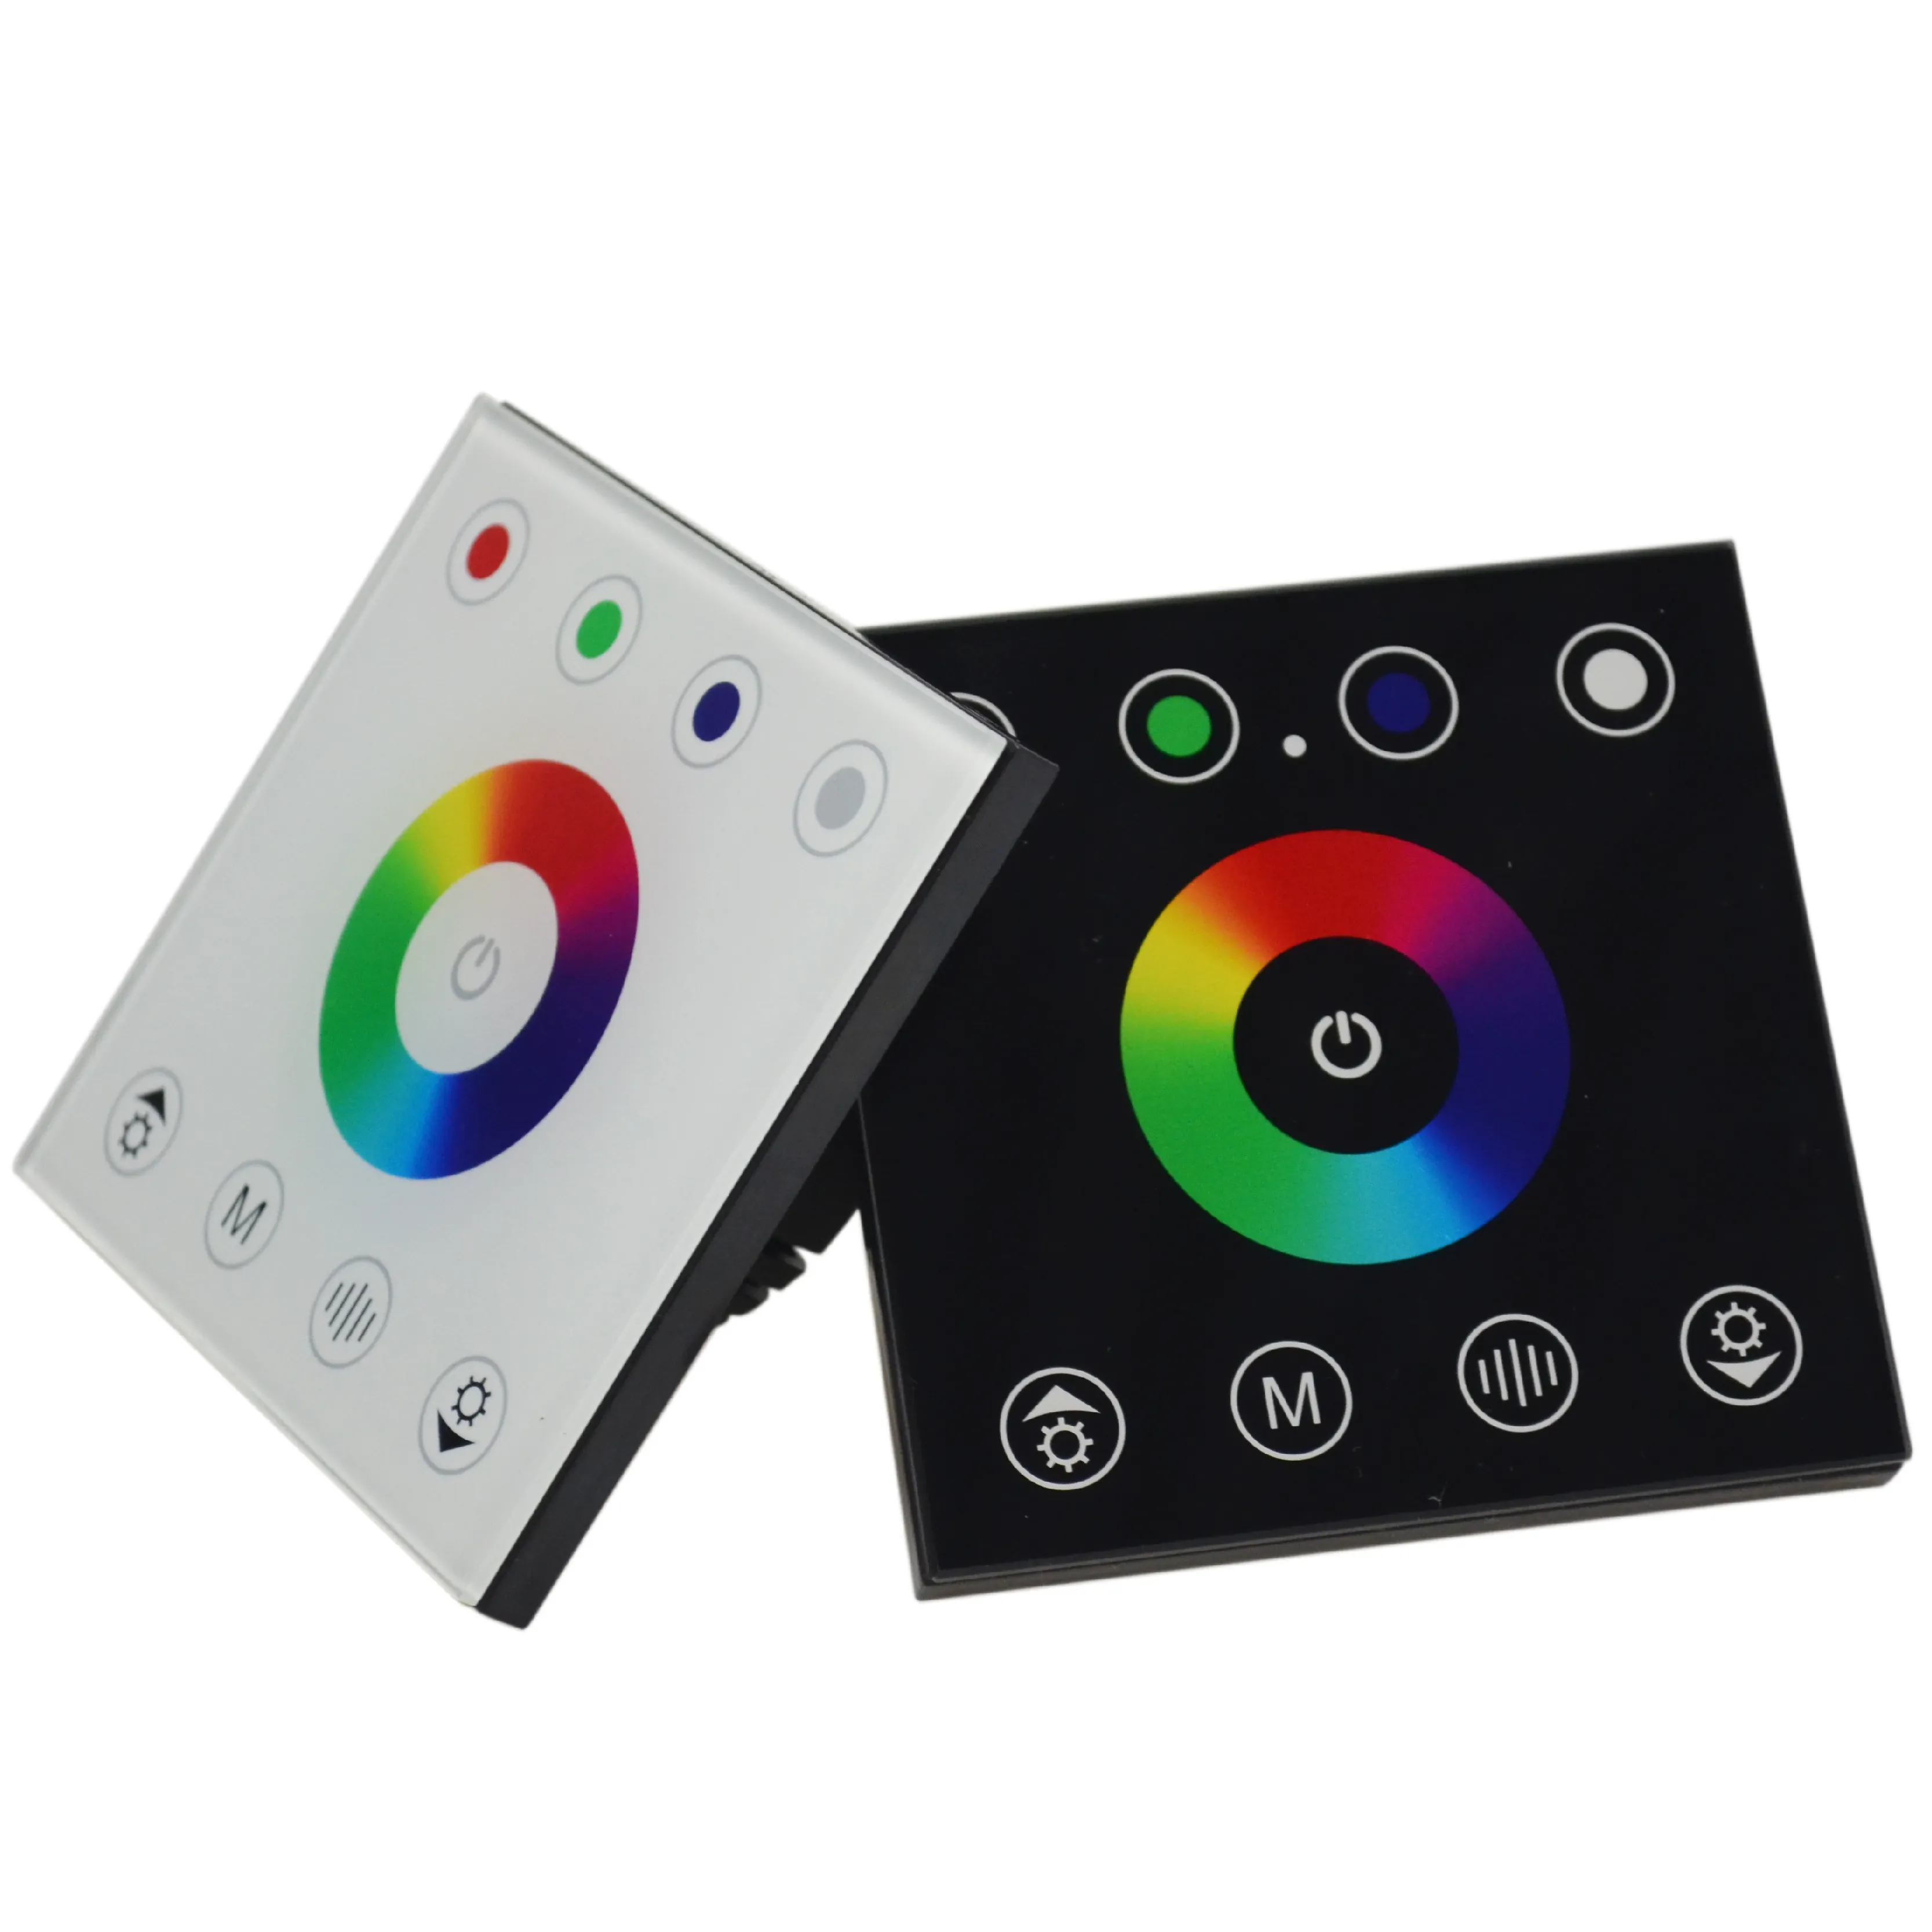 RGBW LED Controller With APP Control For Fiber Optics Lights